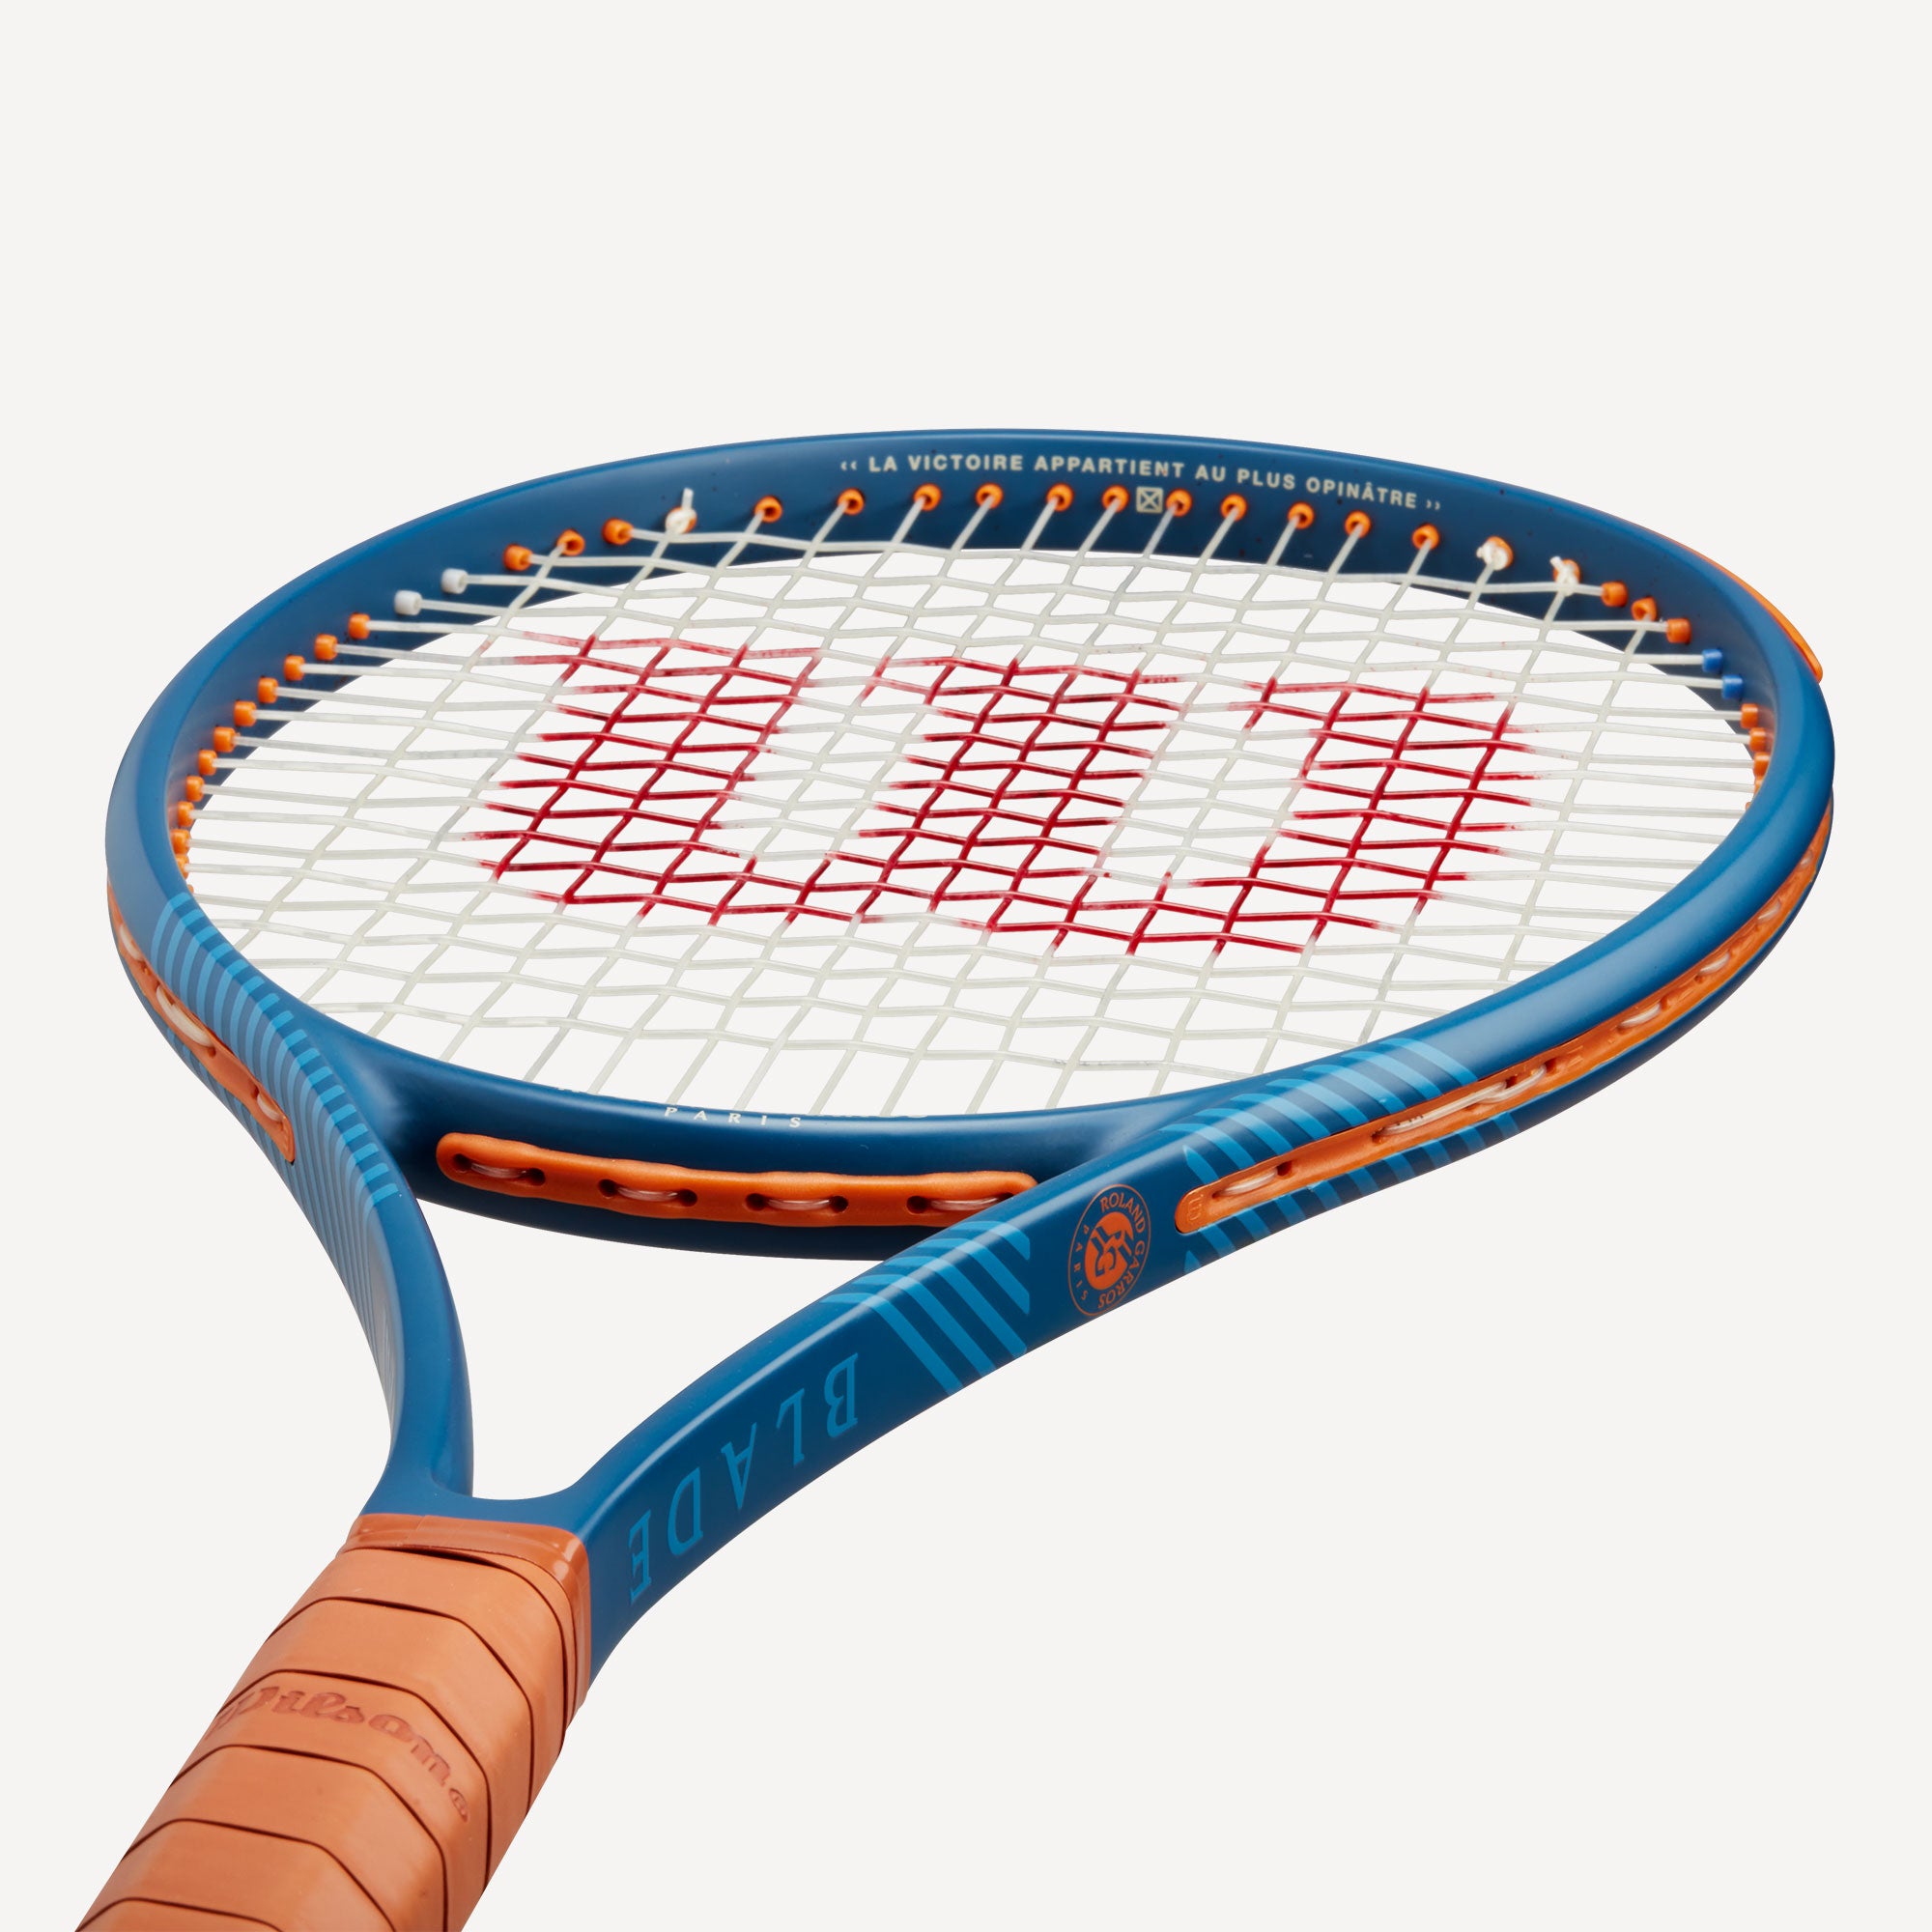 Wilson Roland-Garros Blade 98 16x19 V9 Tennis Racket (5)